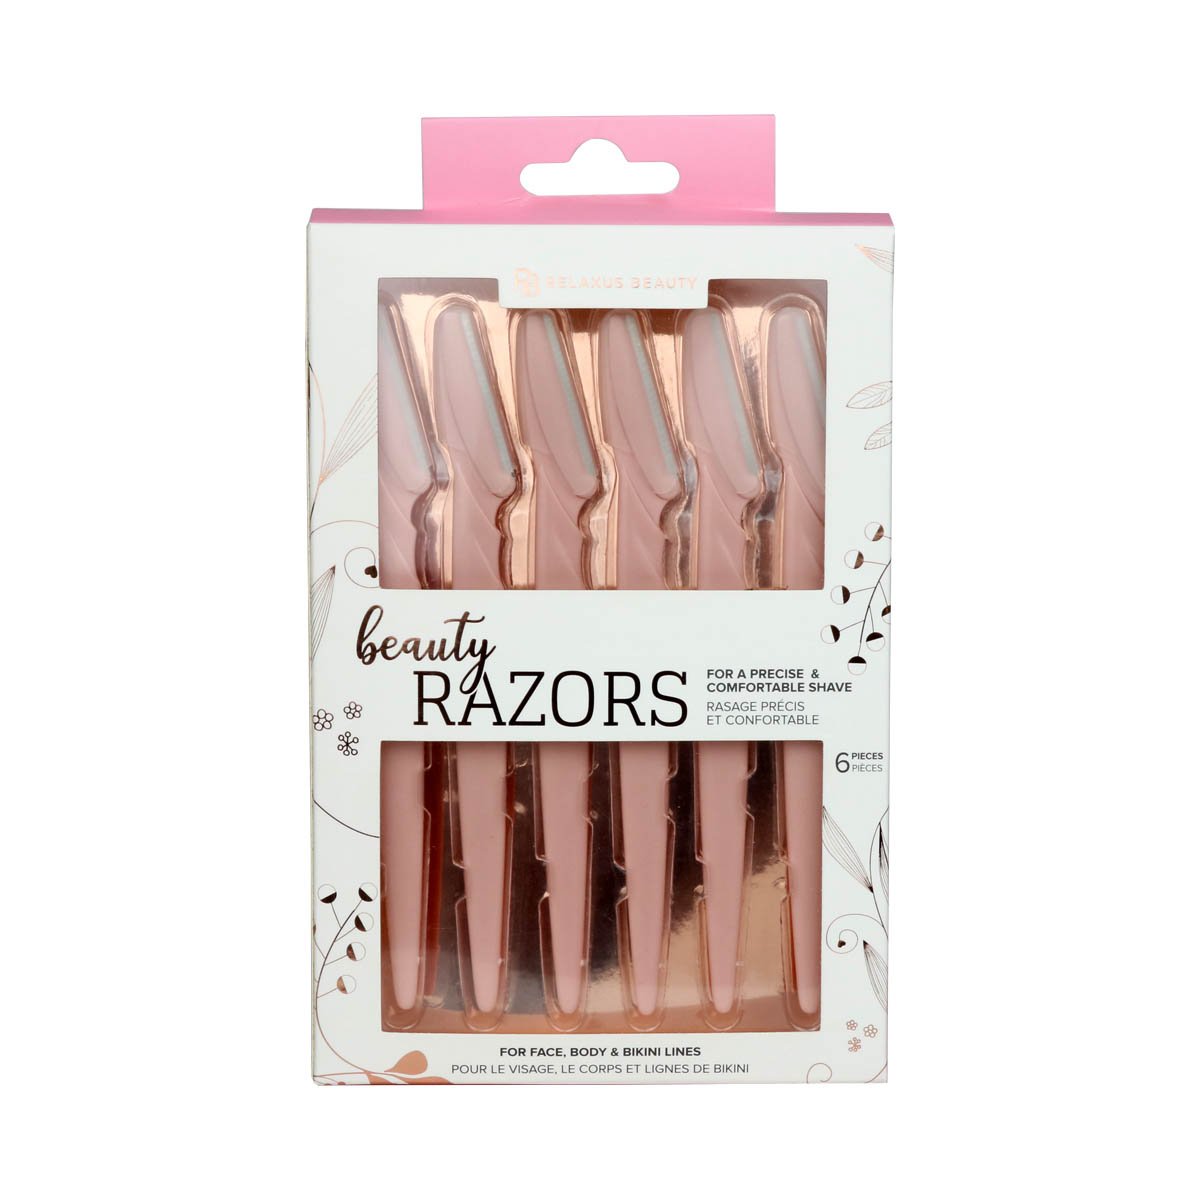 Pink Beauty Razors packaging